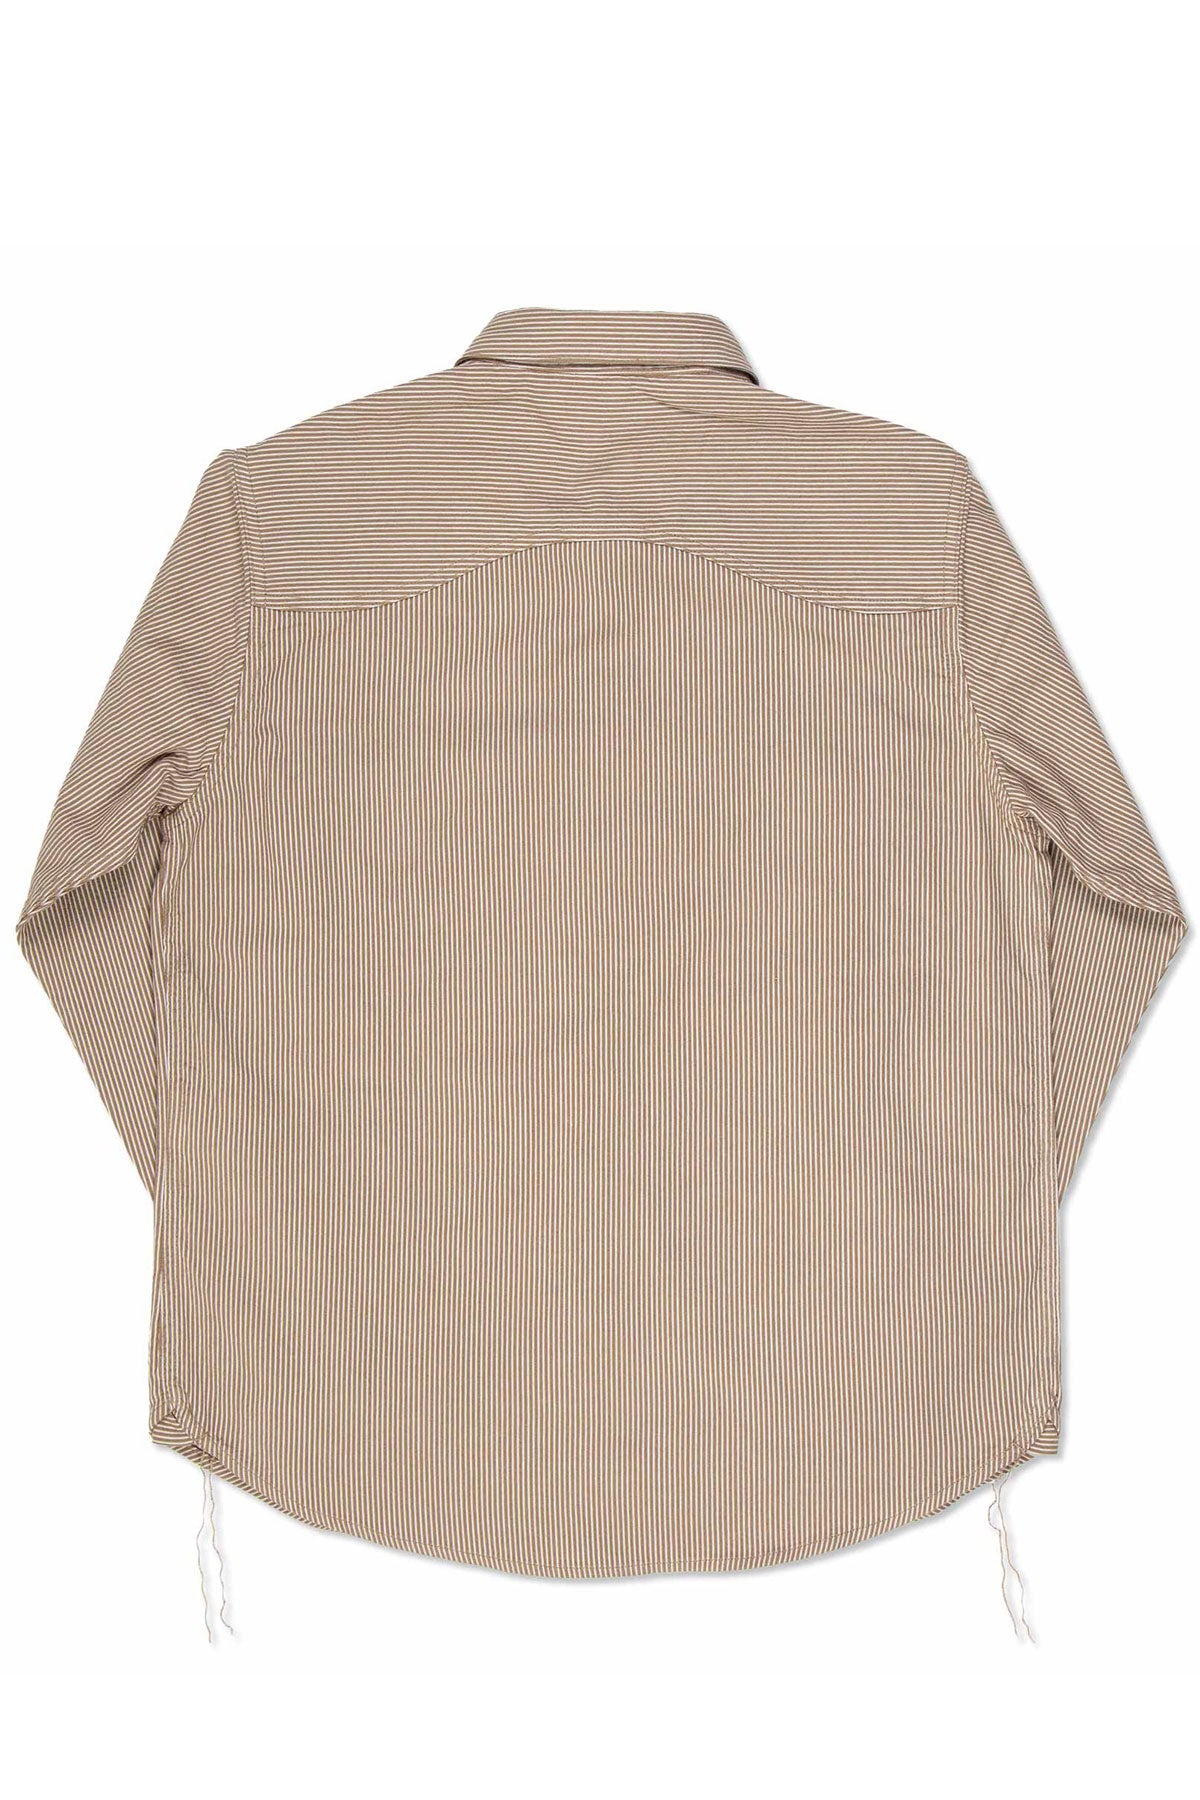 Benzak - BWS-01 Work Shirt 6.5 oz. brown cord stripe